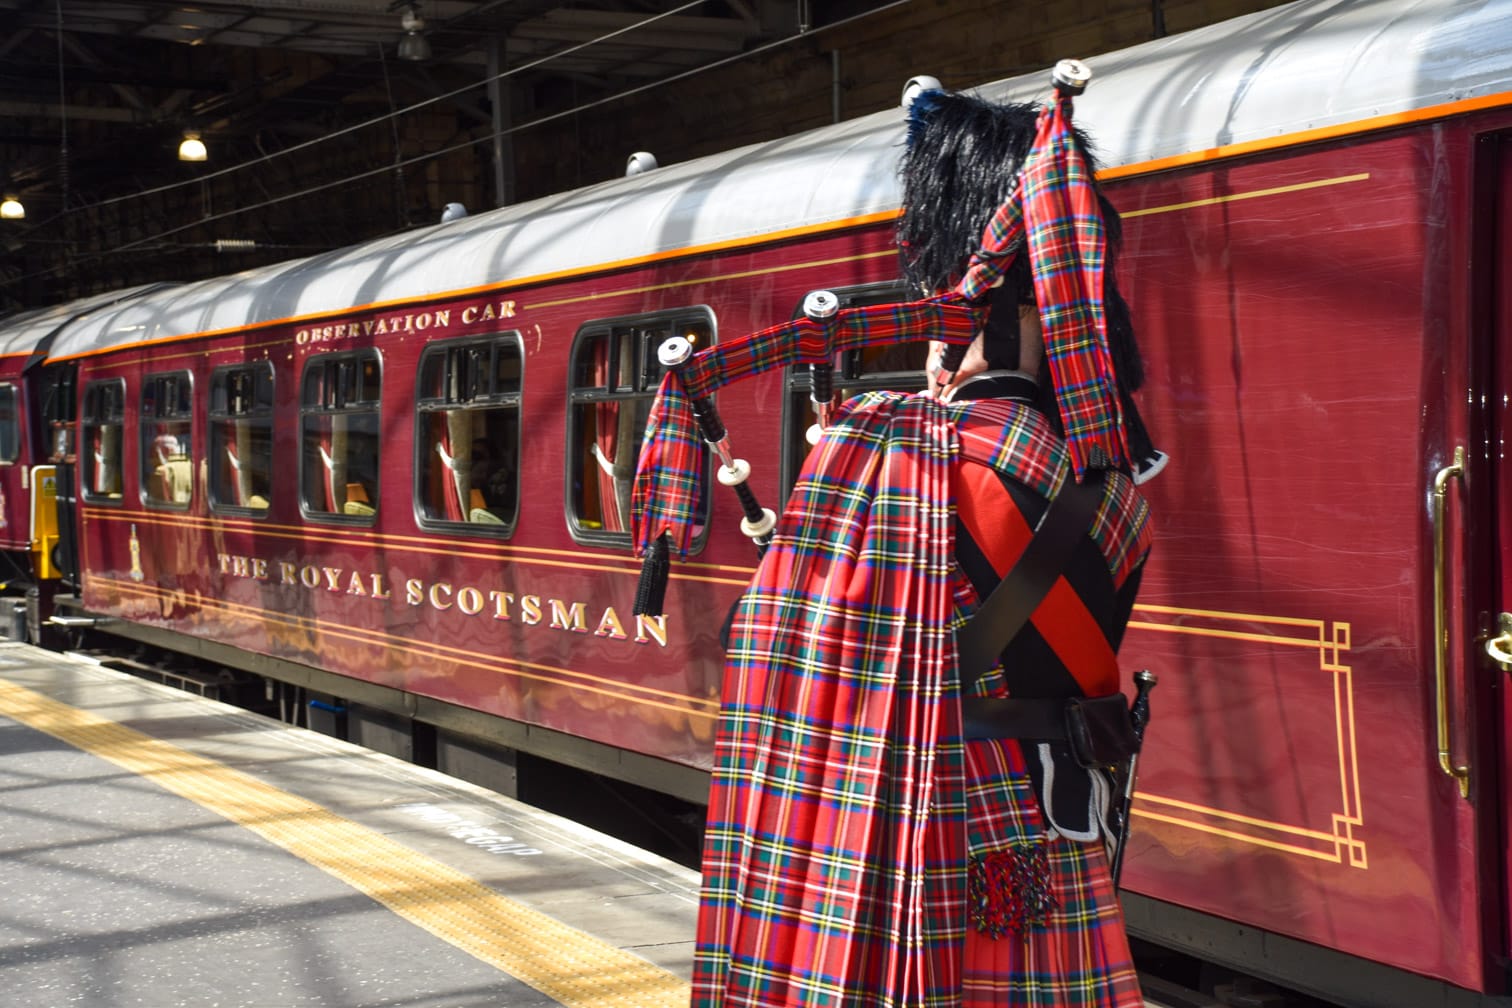 Belmond Royal Scotsman - Society of International Railway Travelers